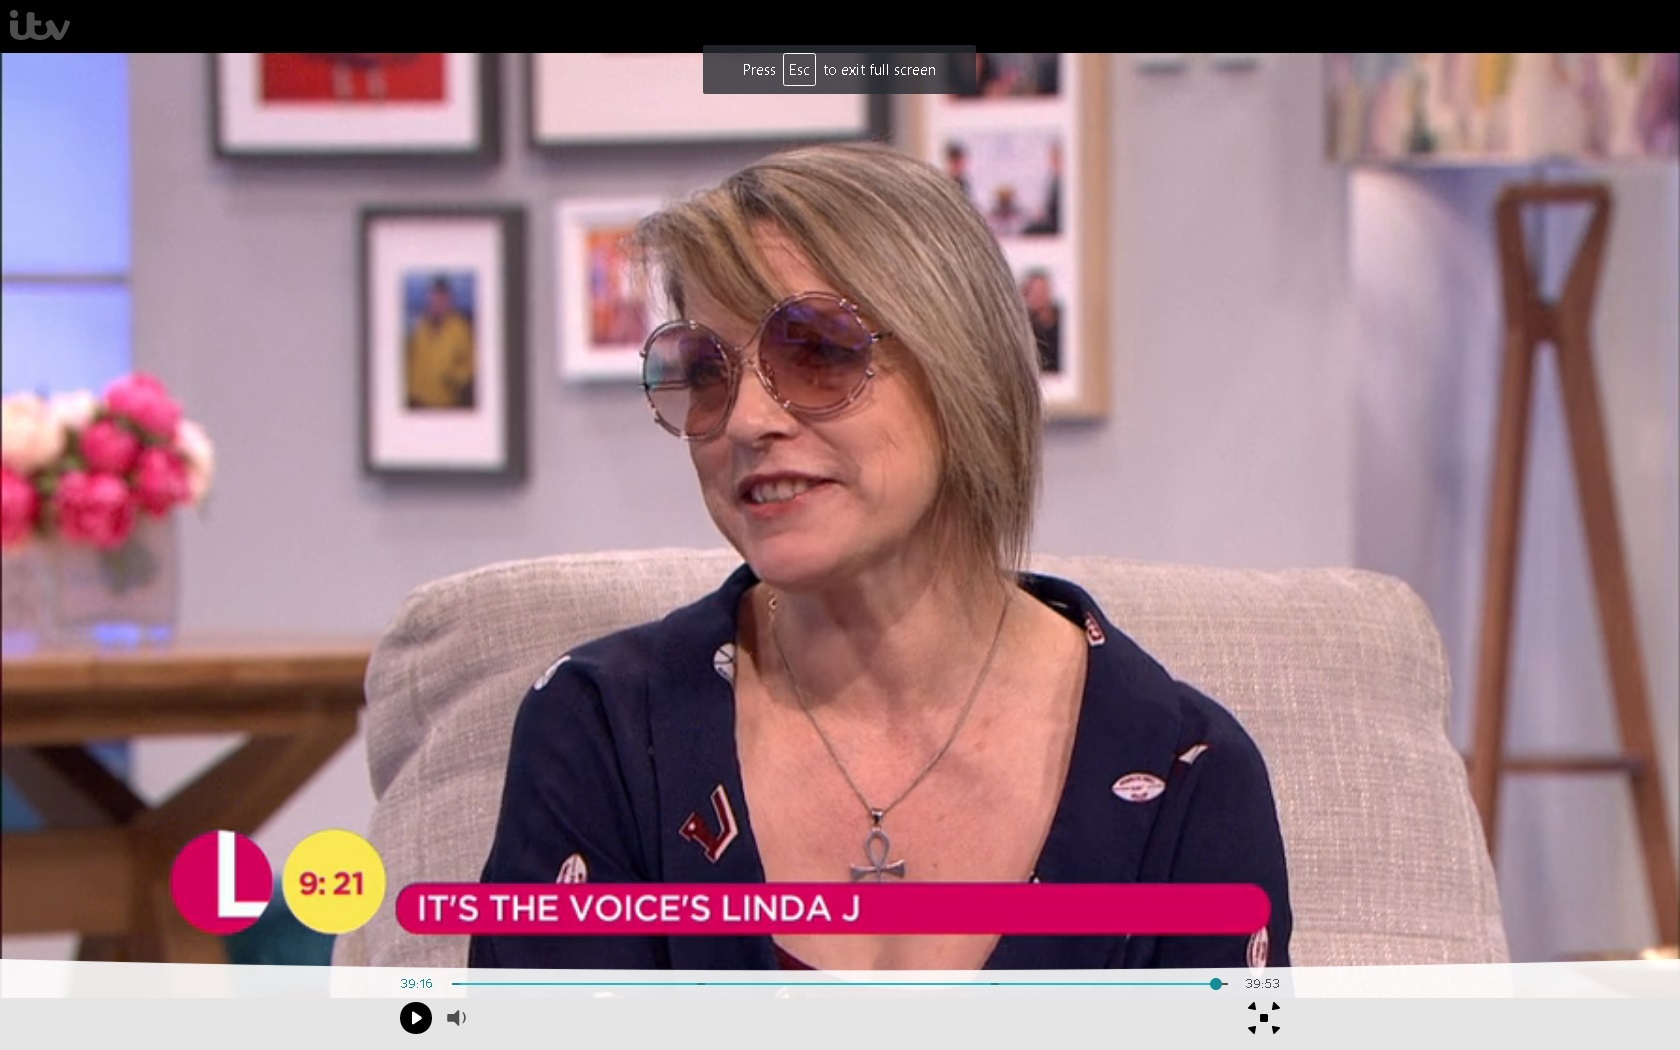 The Voice sensation Linda Jennings appears on national TV